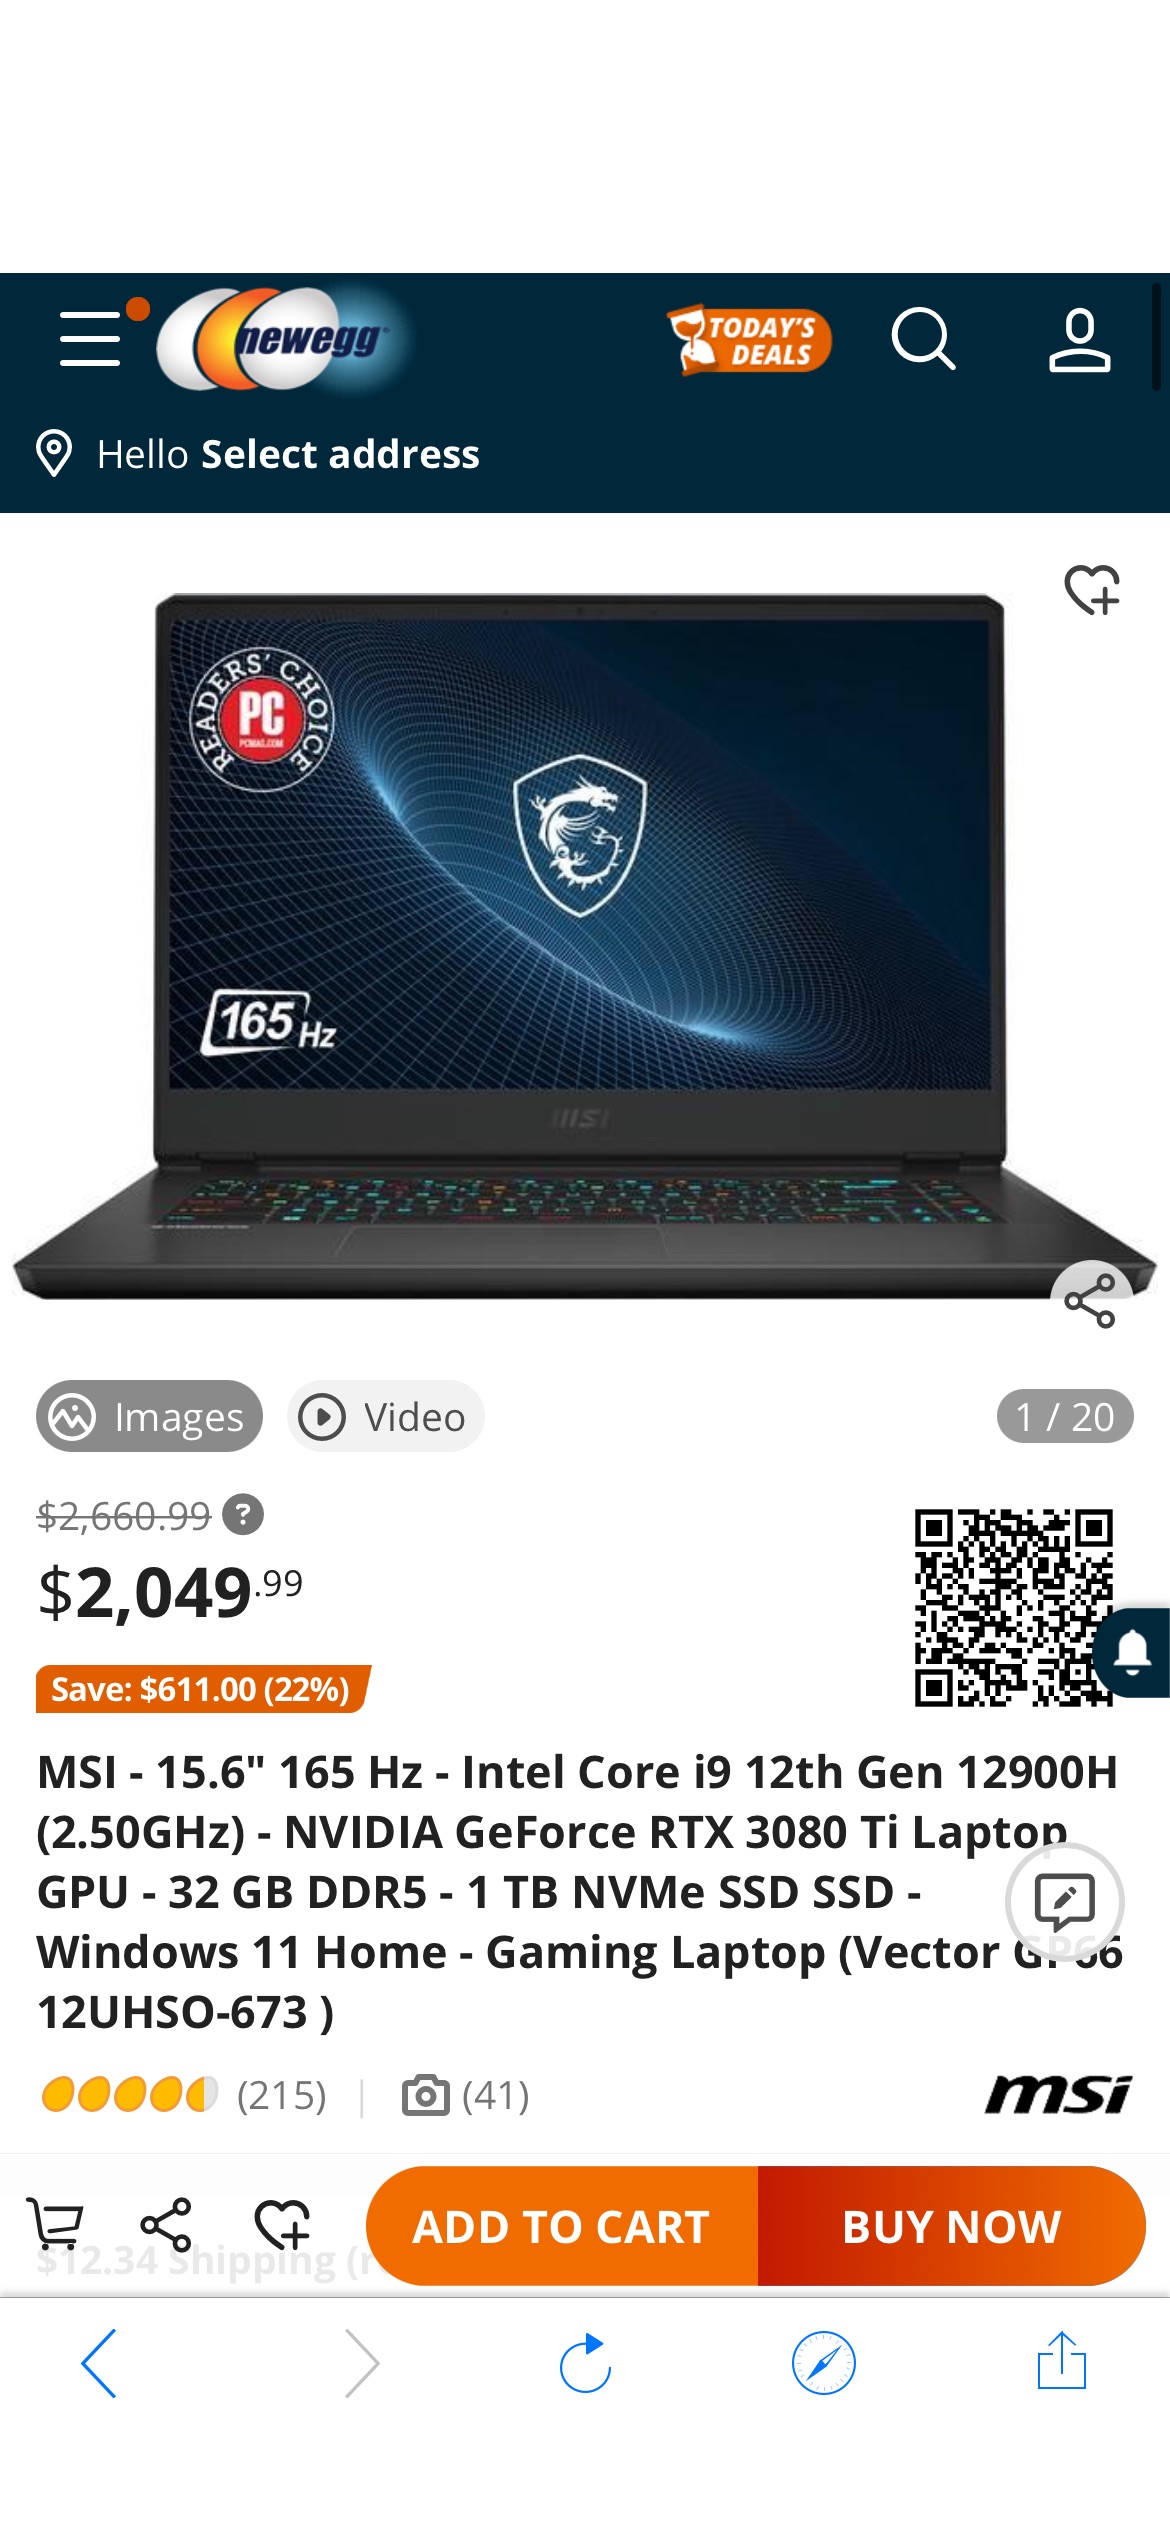 MSI - 15.6" 165 Hz - Intel Core i9 12th Gen 12900H (2.50GHz) - NVIDIA GeForce RTX 3080 Ti Laptop GPU - 32 GB DDR5 - 1 TB NVMe SSD SSD - Windows 11 Home - Gaming Laptop